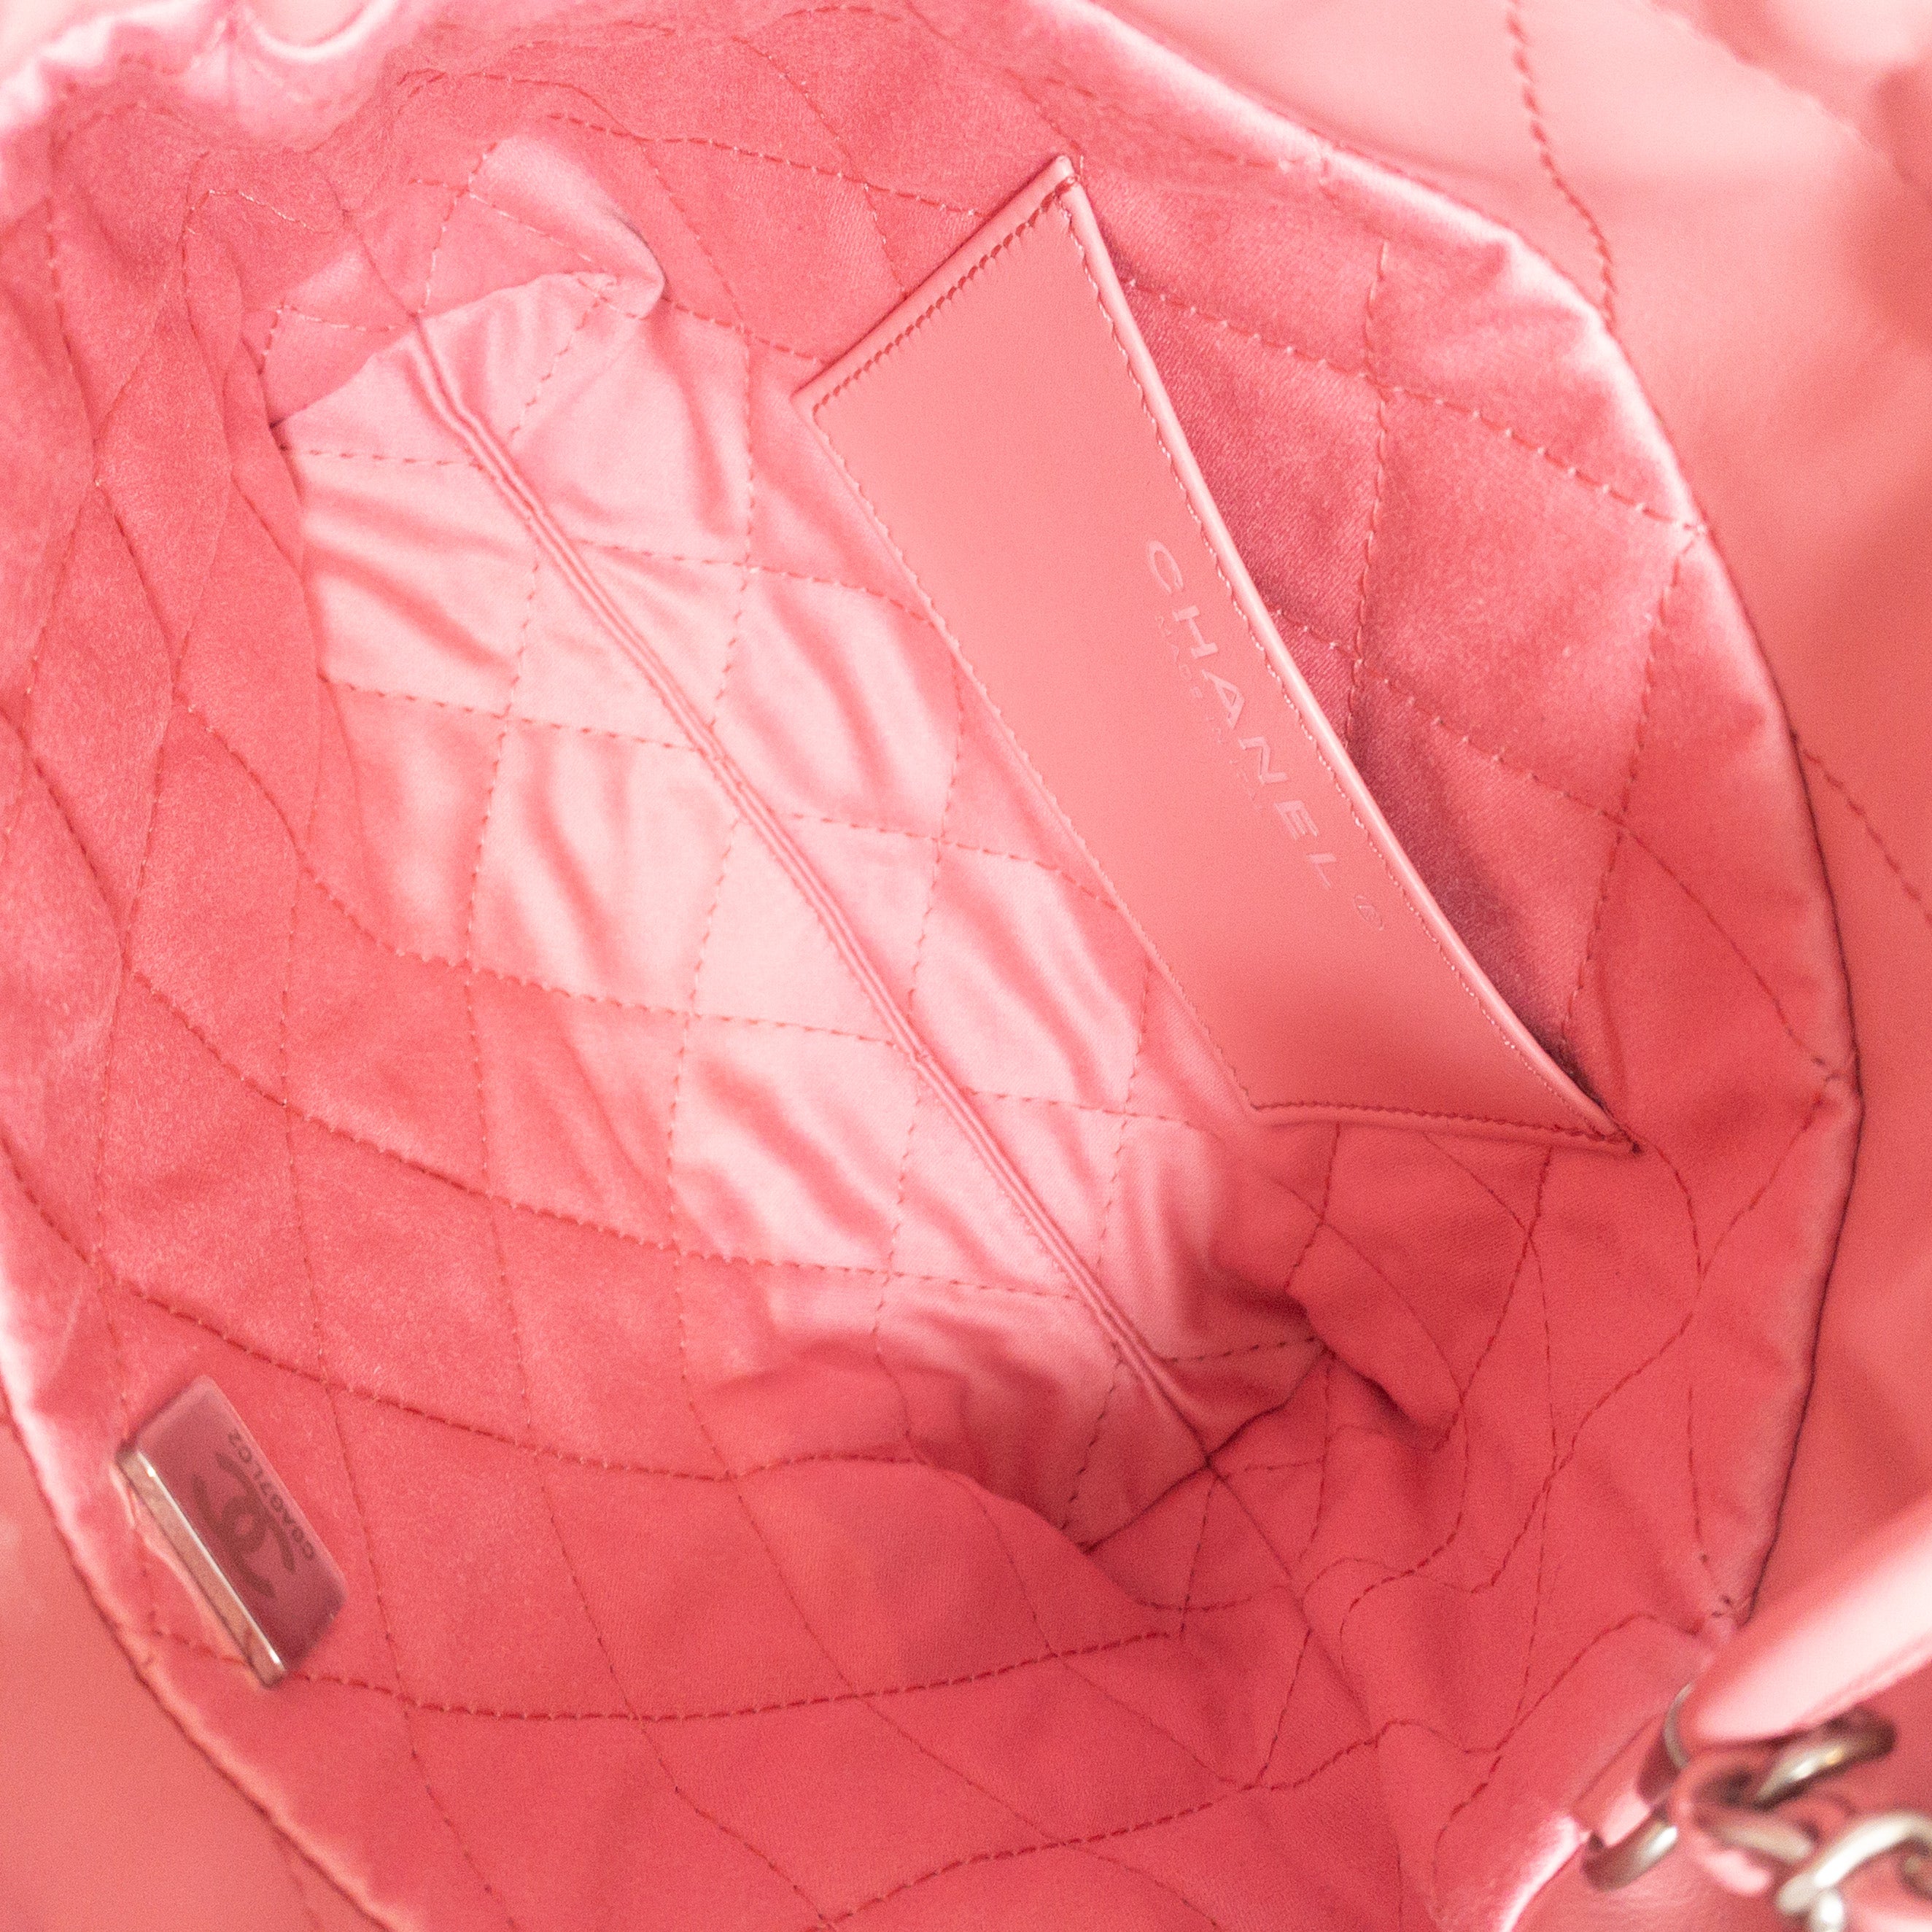 Chanel Chanel 22 Mini Handbag As3980 B10681 NN489 , Pink, One Size